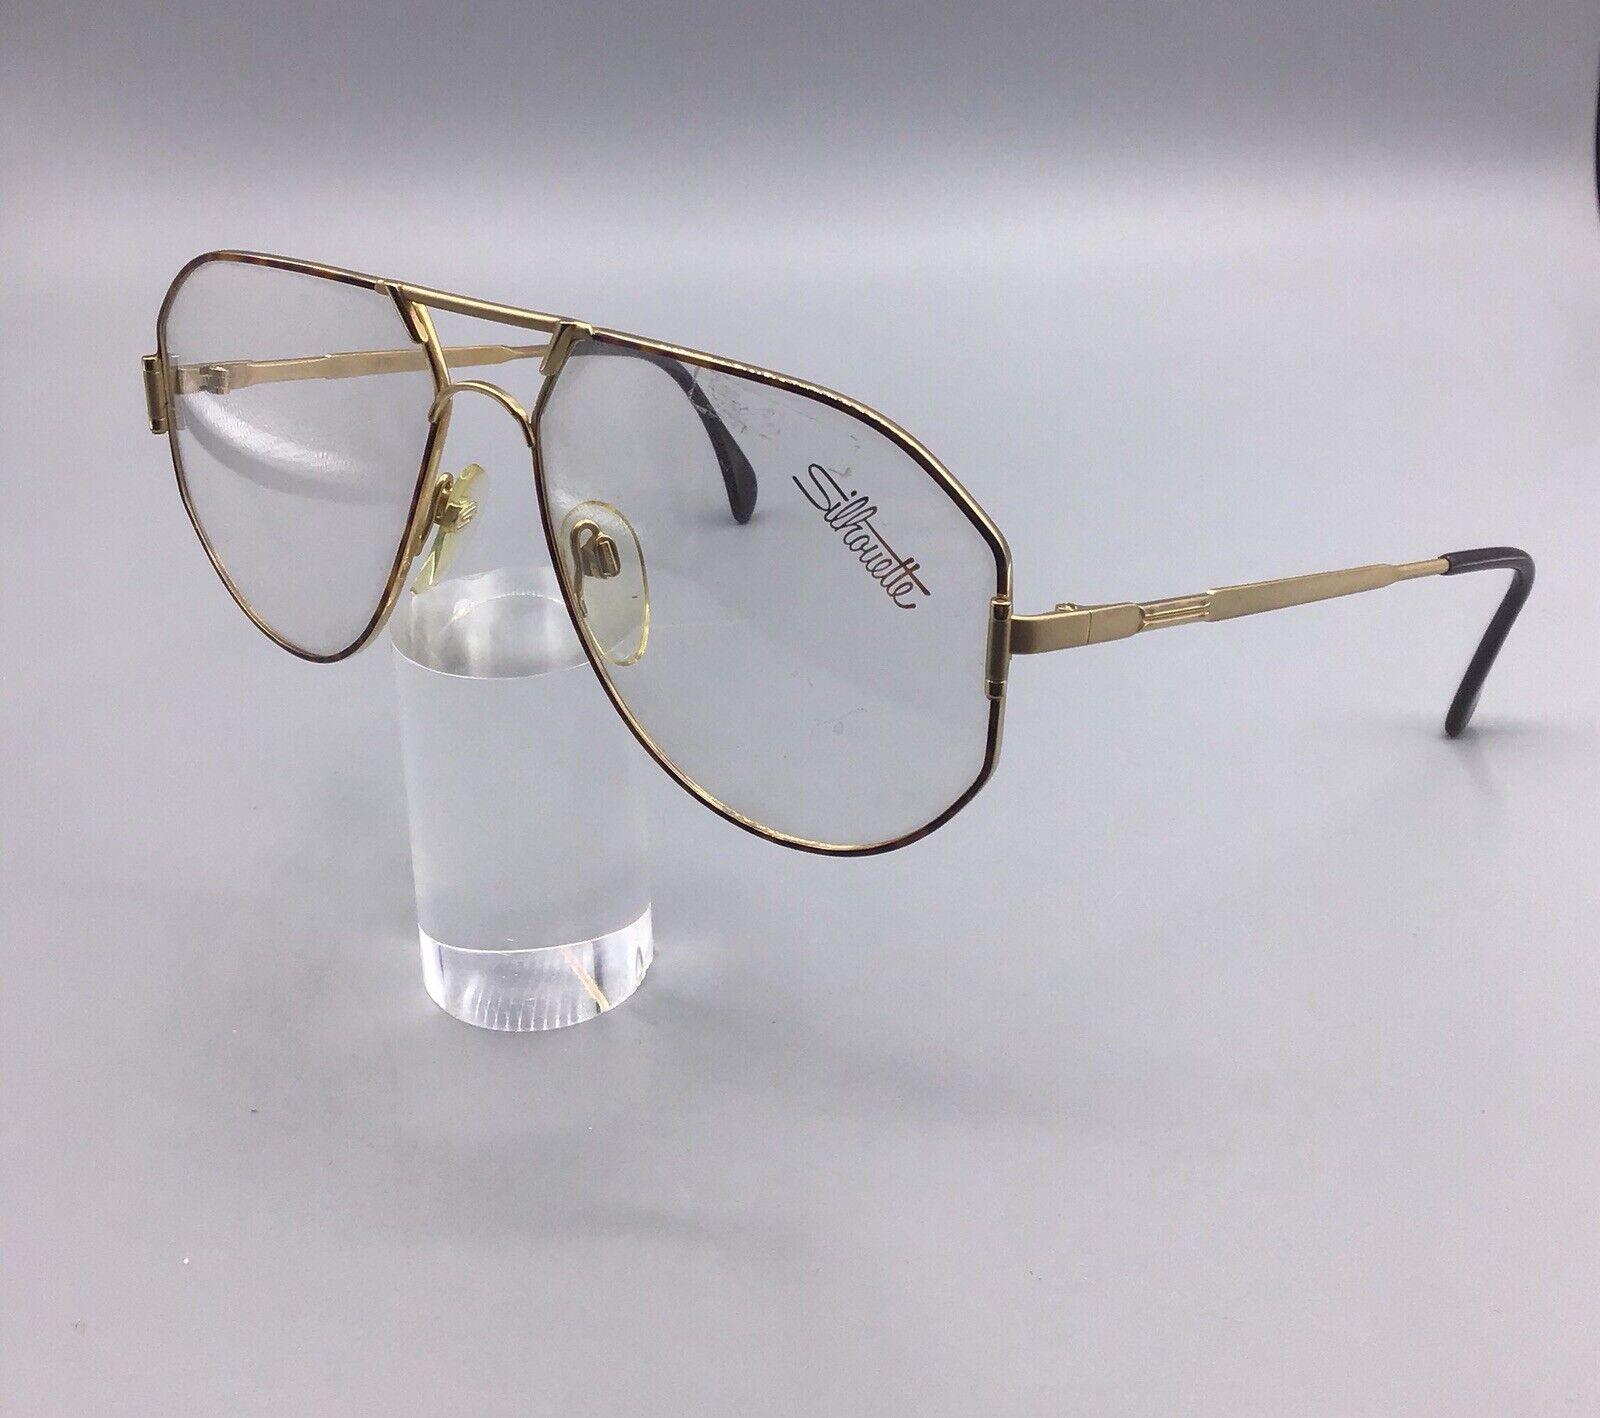 Silhouette occhiale vintage frame Austria col.4198 M7061 /20 eyewear frame gold